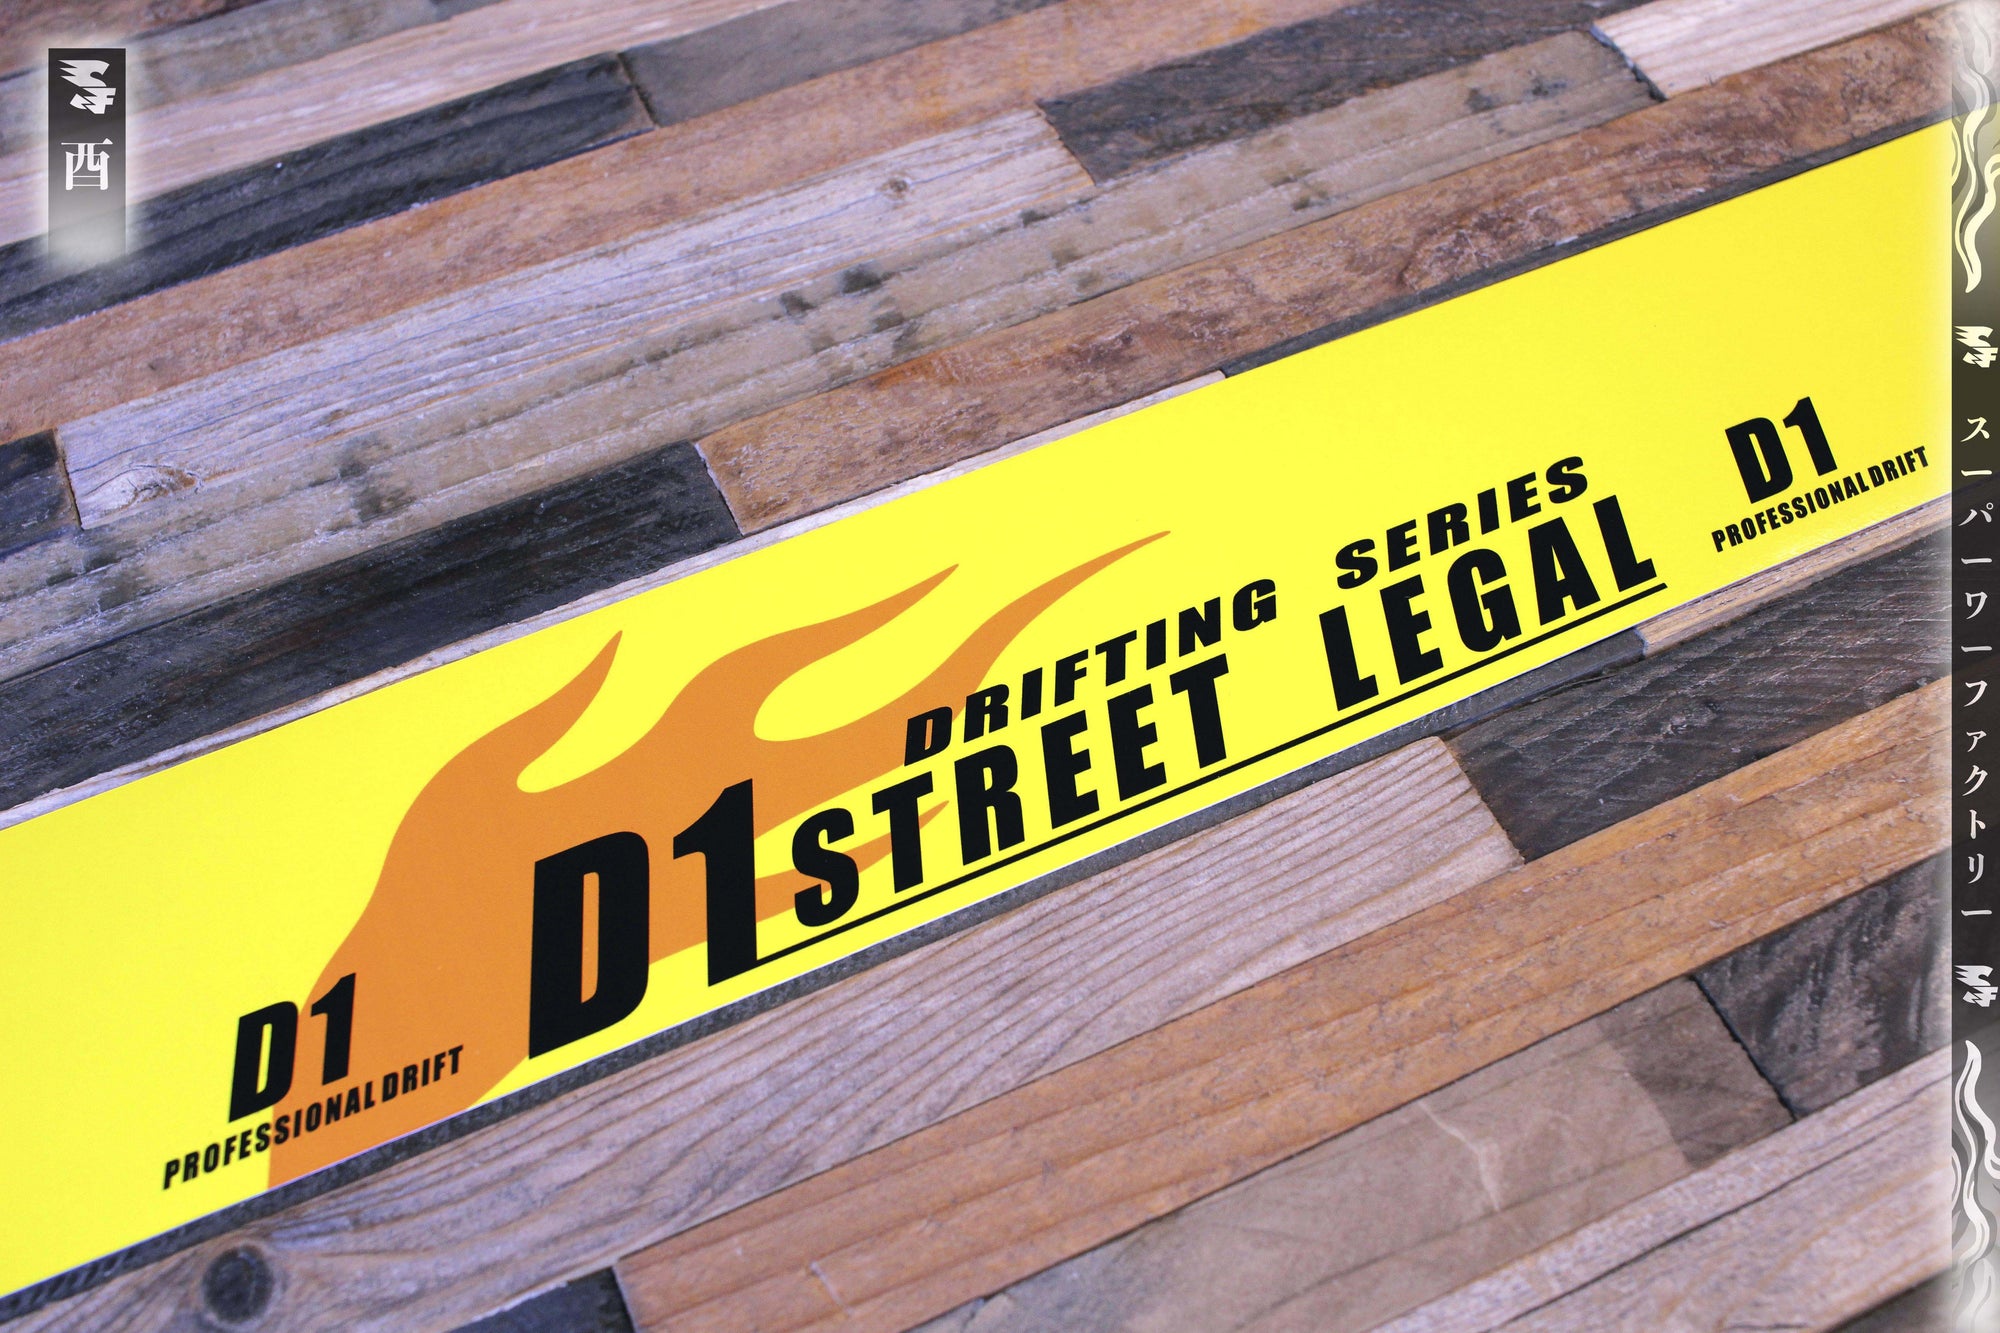 D1GP Street Legal Windshield Banner